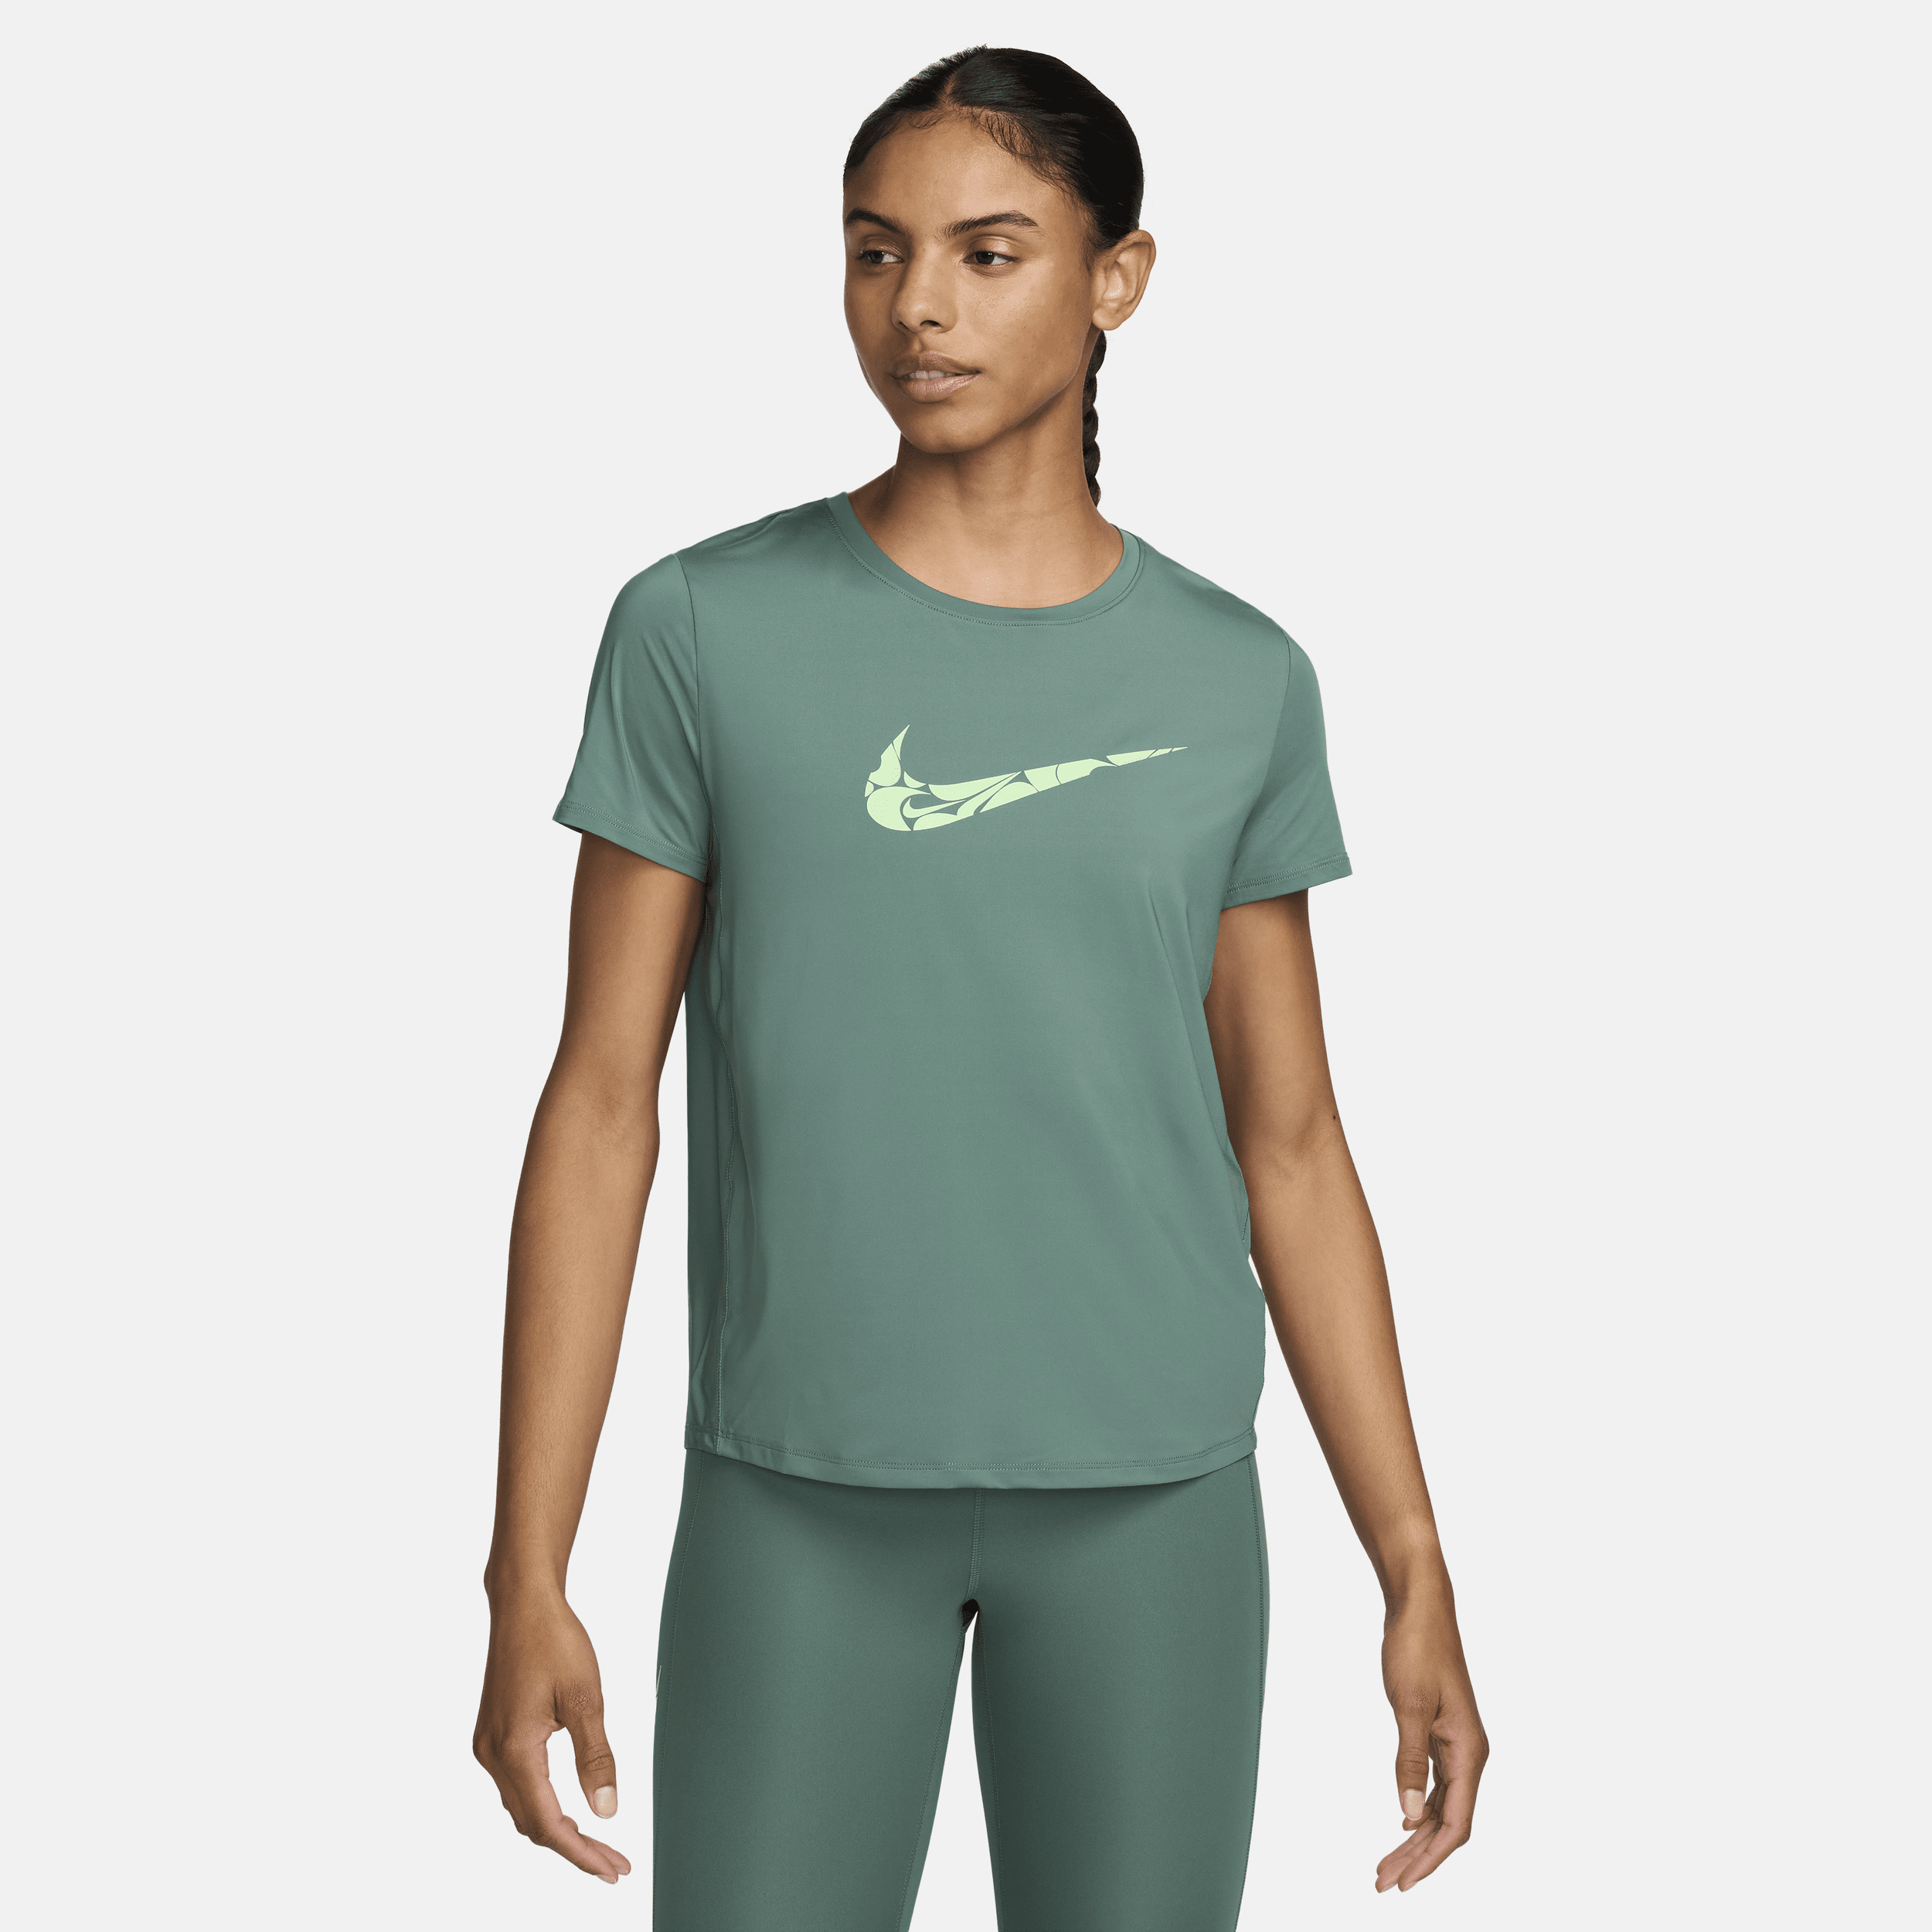 Nike One Swoosh Dri-FIT hardlooptop met korte mouwen voor dames - Groen